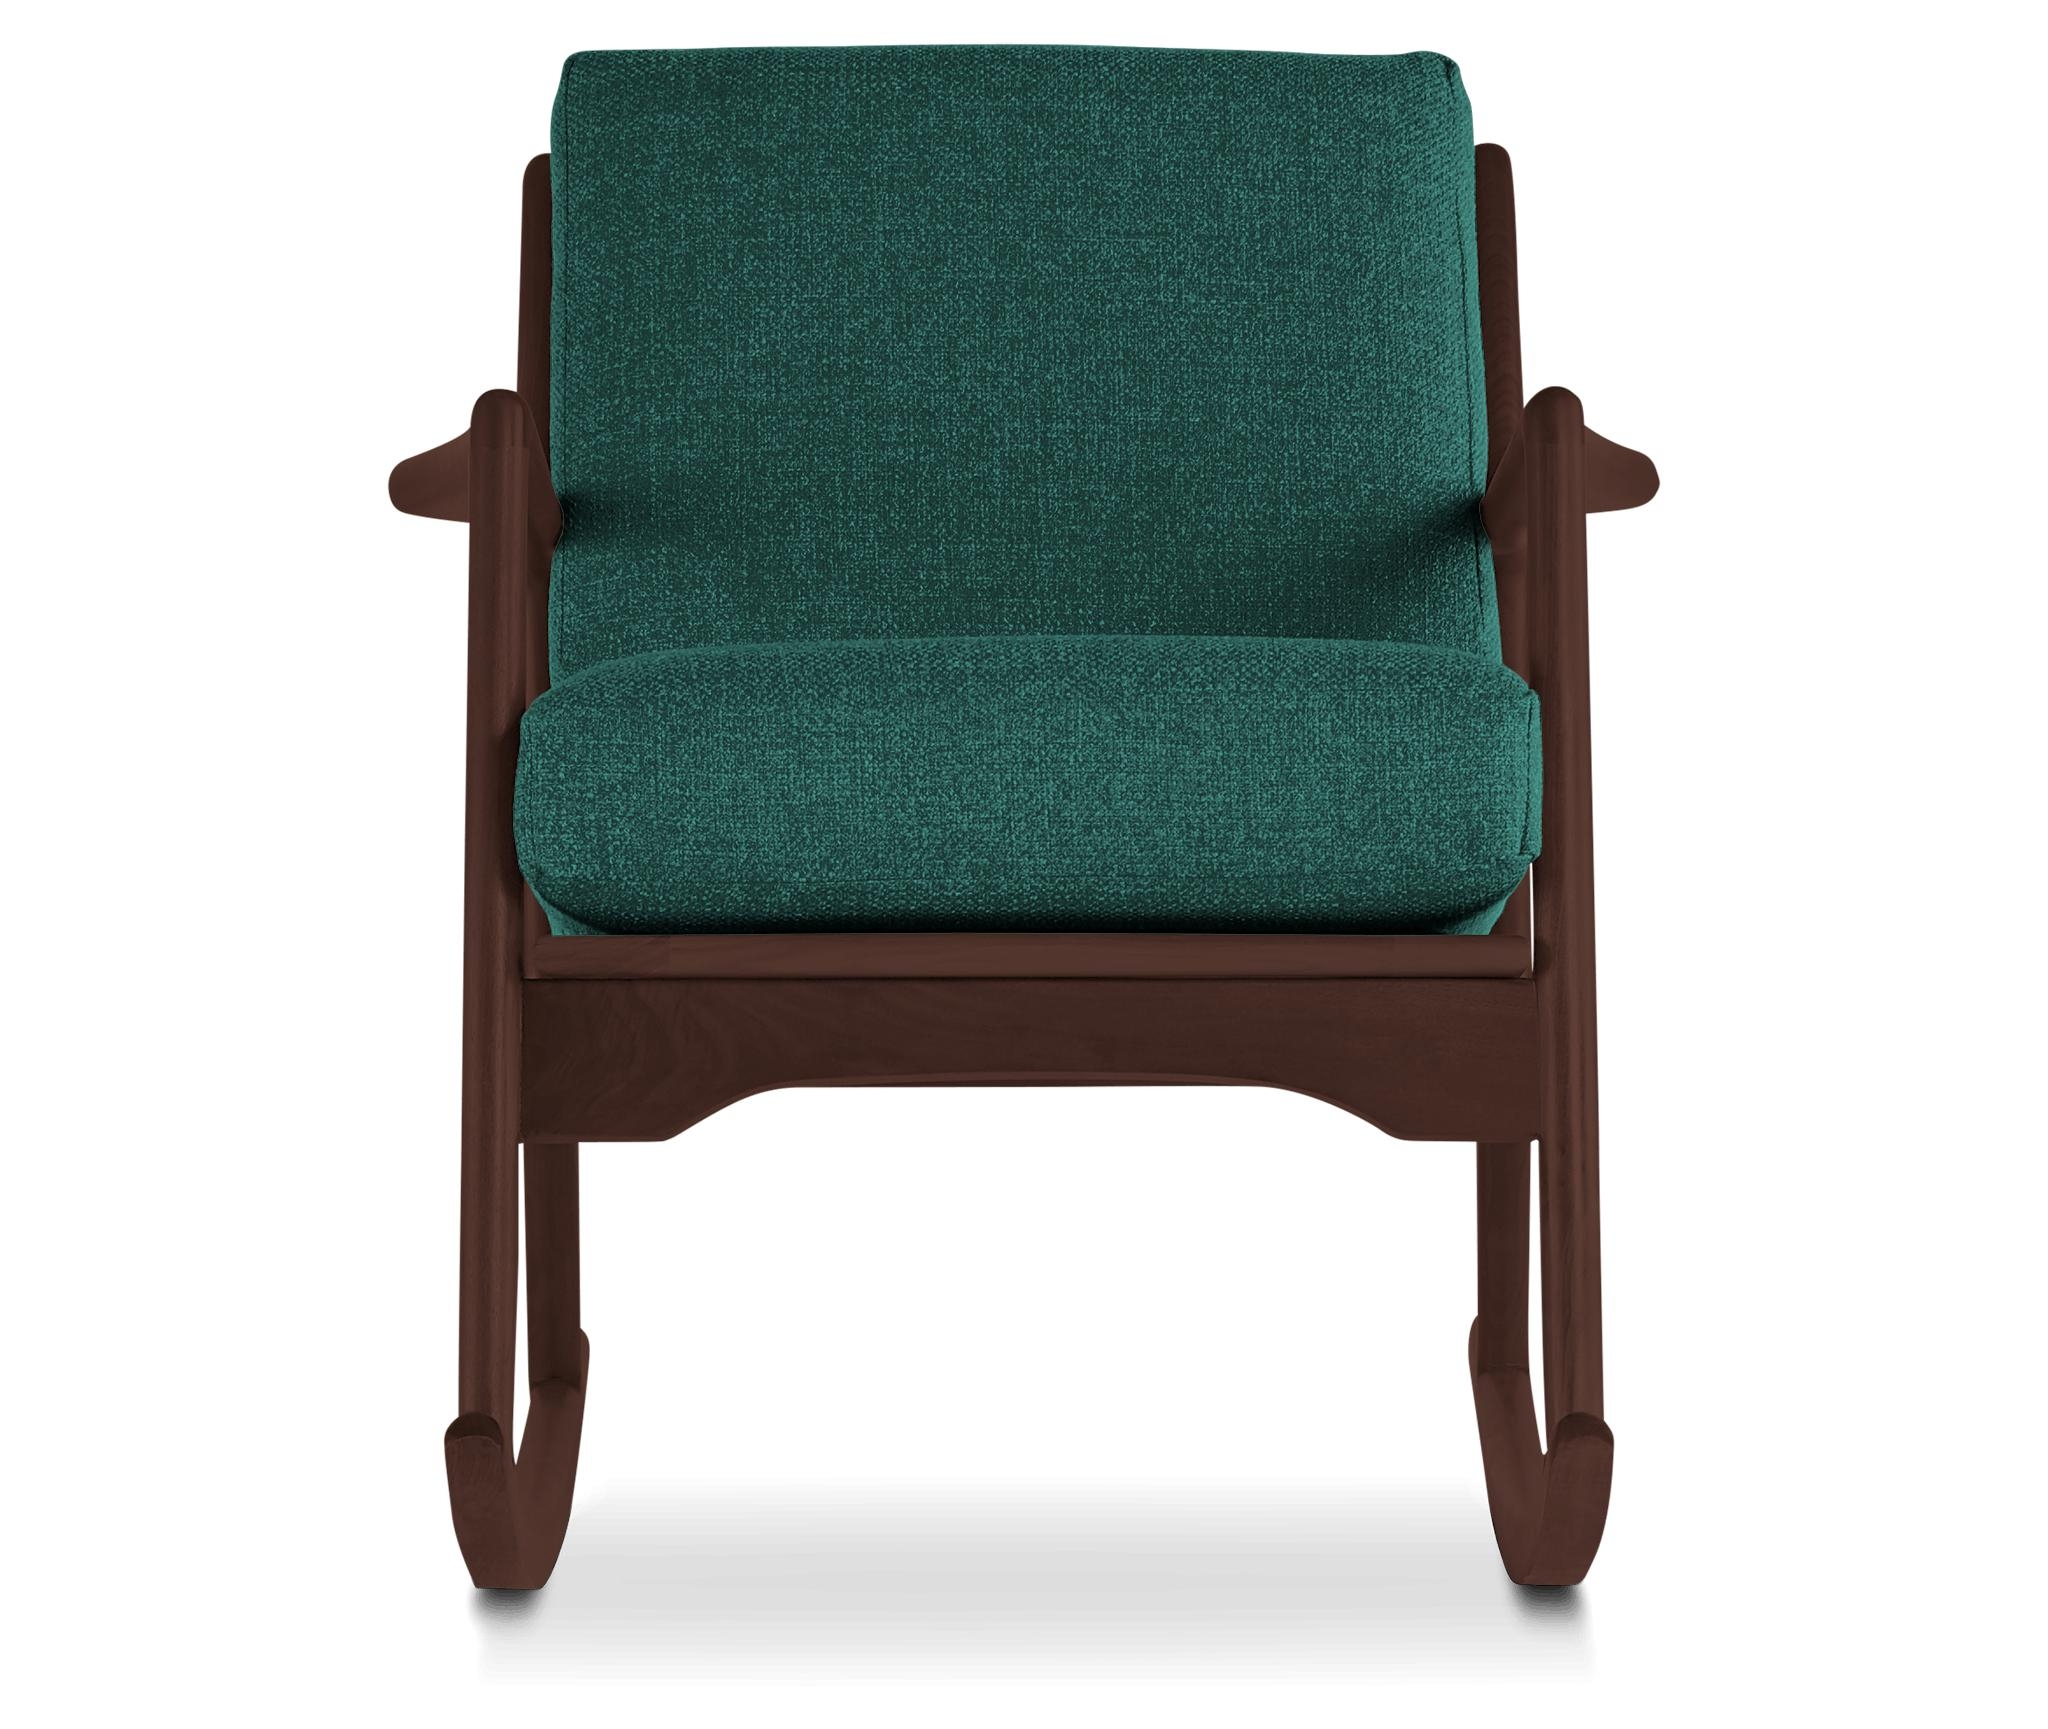 Blue Collins Mid Century Modern Rocking Chair - Prime Peacock - Walnut - Image 0